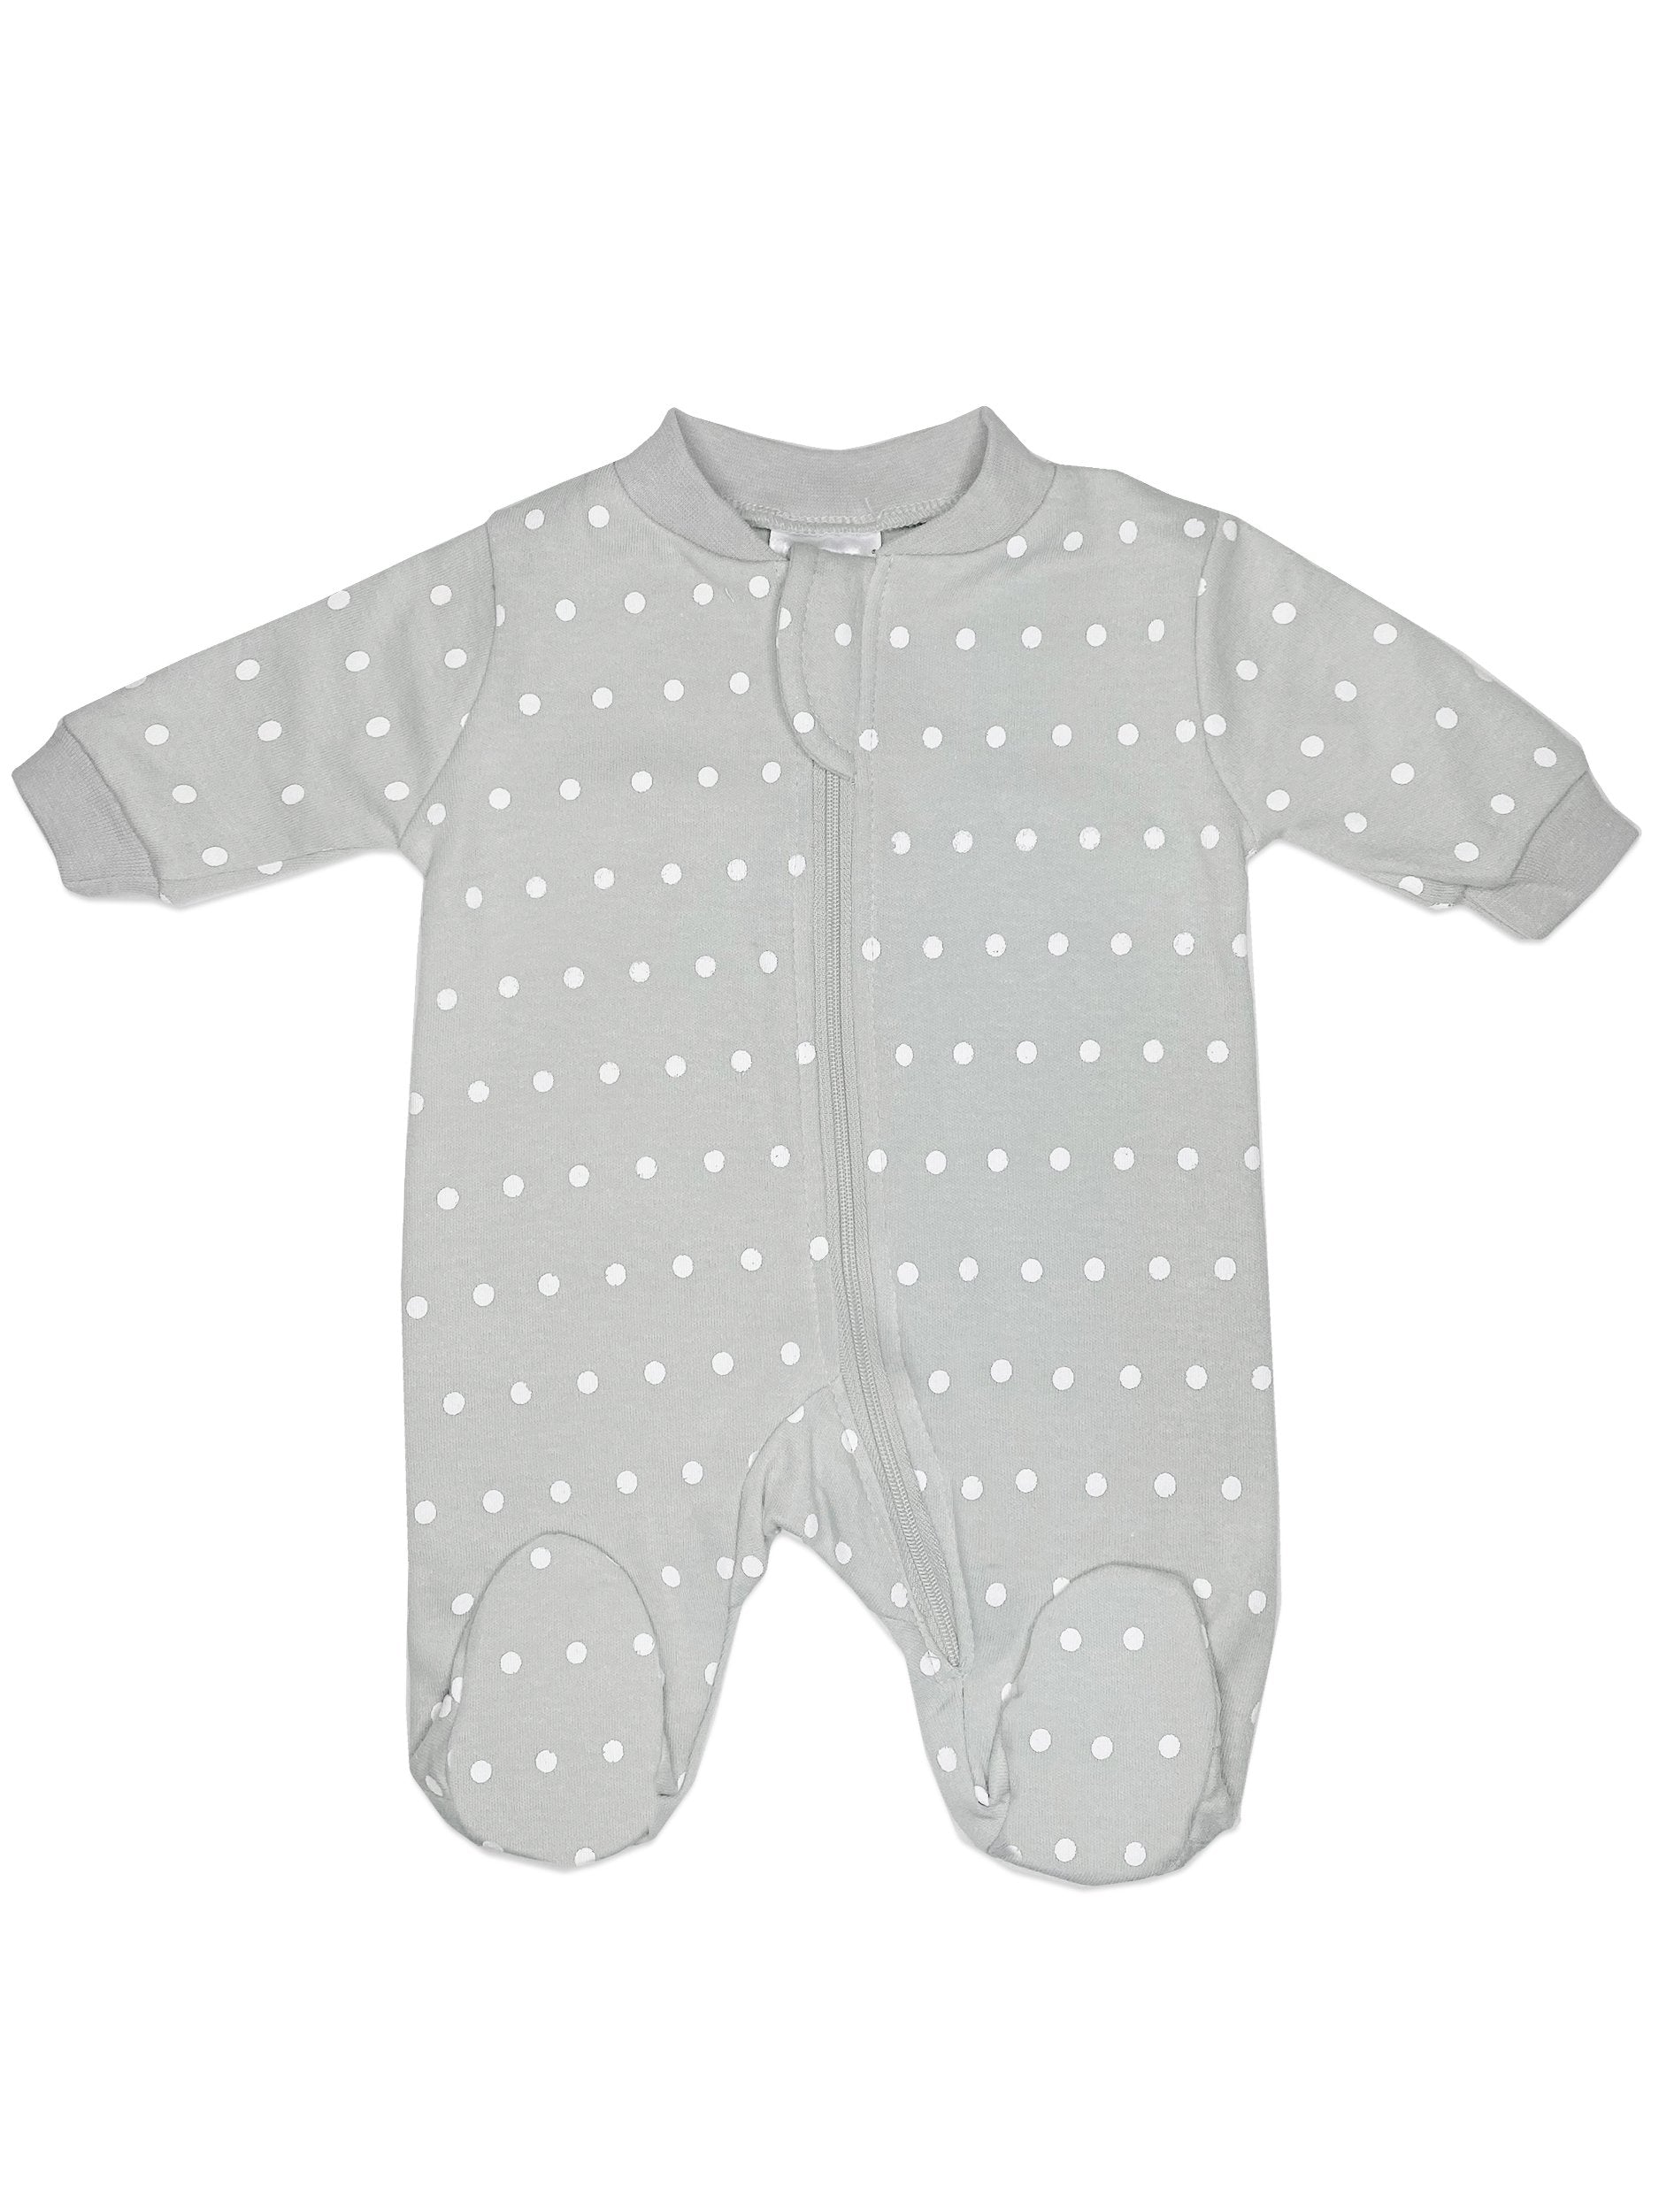 Tiny Baby Size Zip Up Footed Sleepsuit, Grey Polkadot - Sleepsuit / Babygrow - Baby Mode